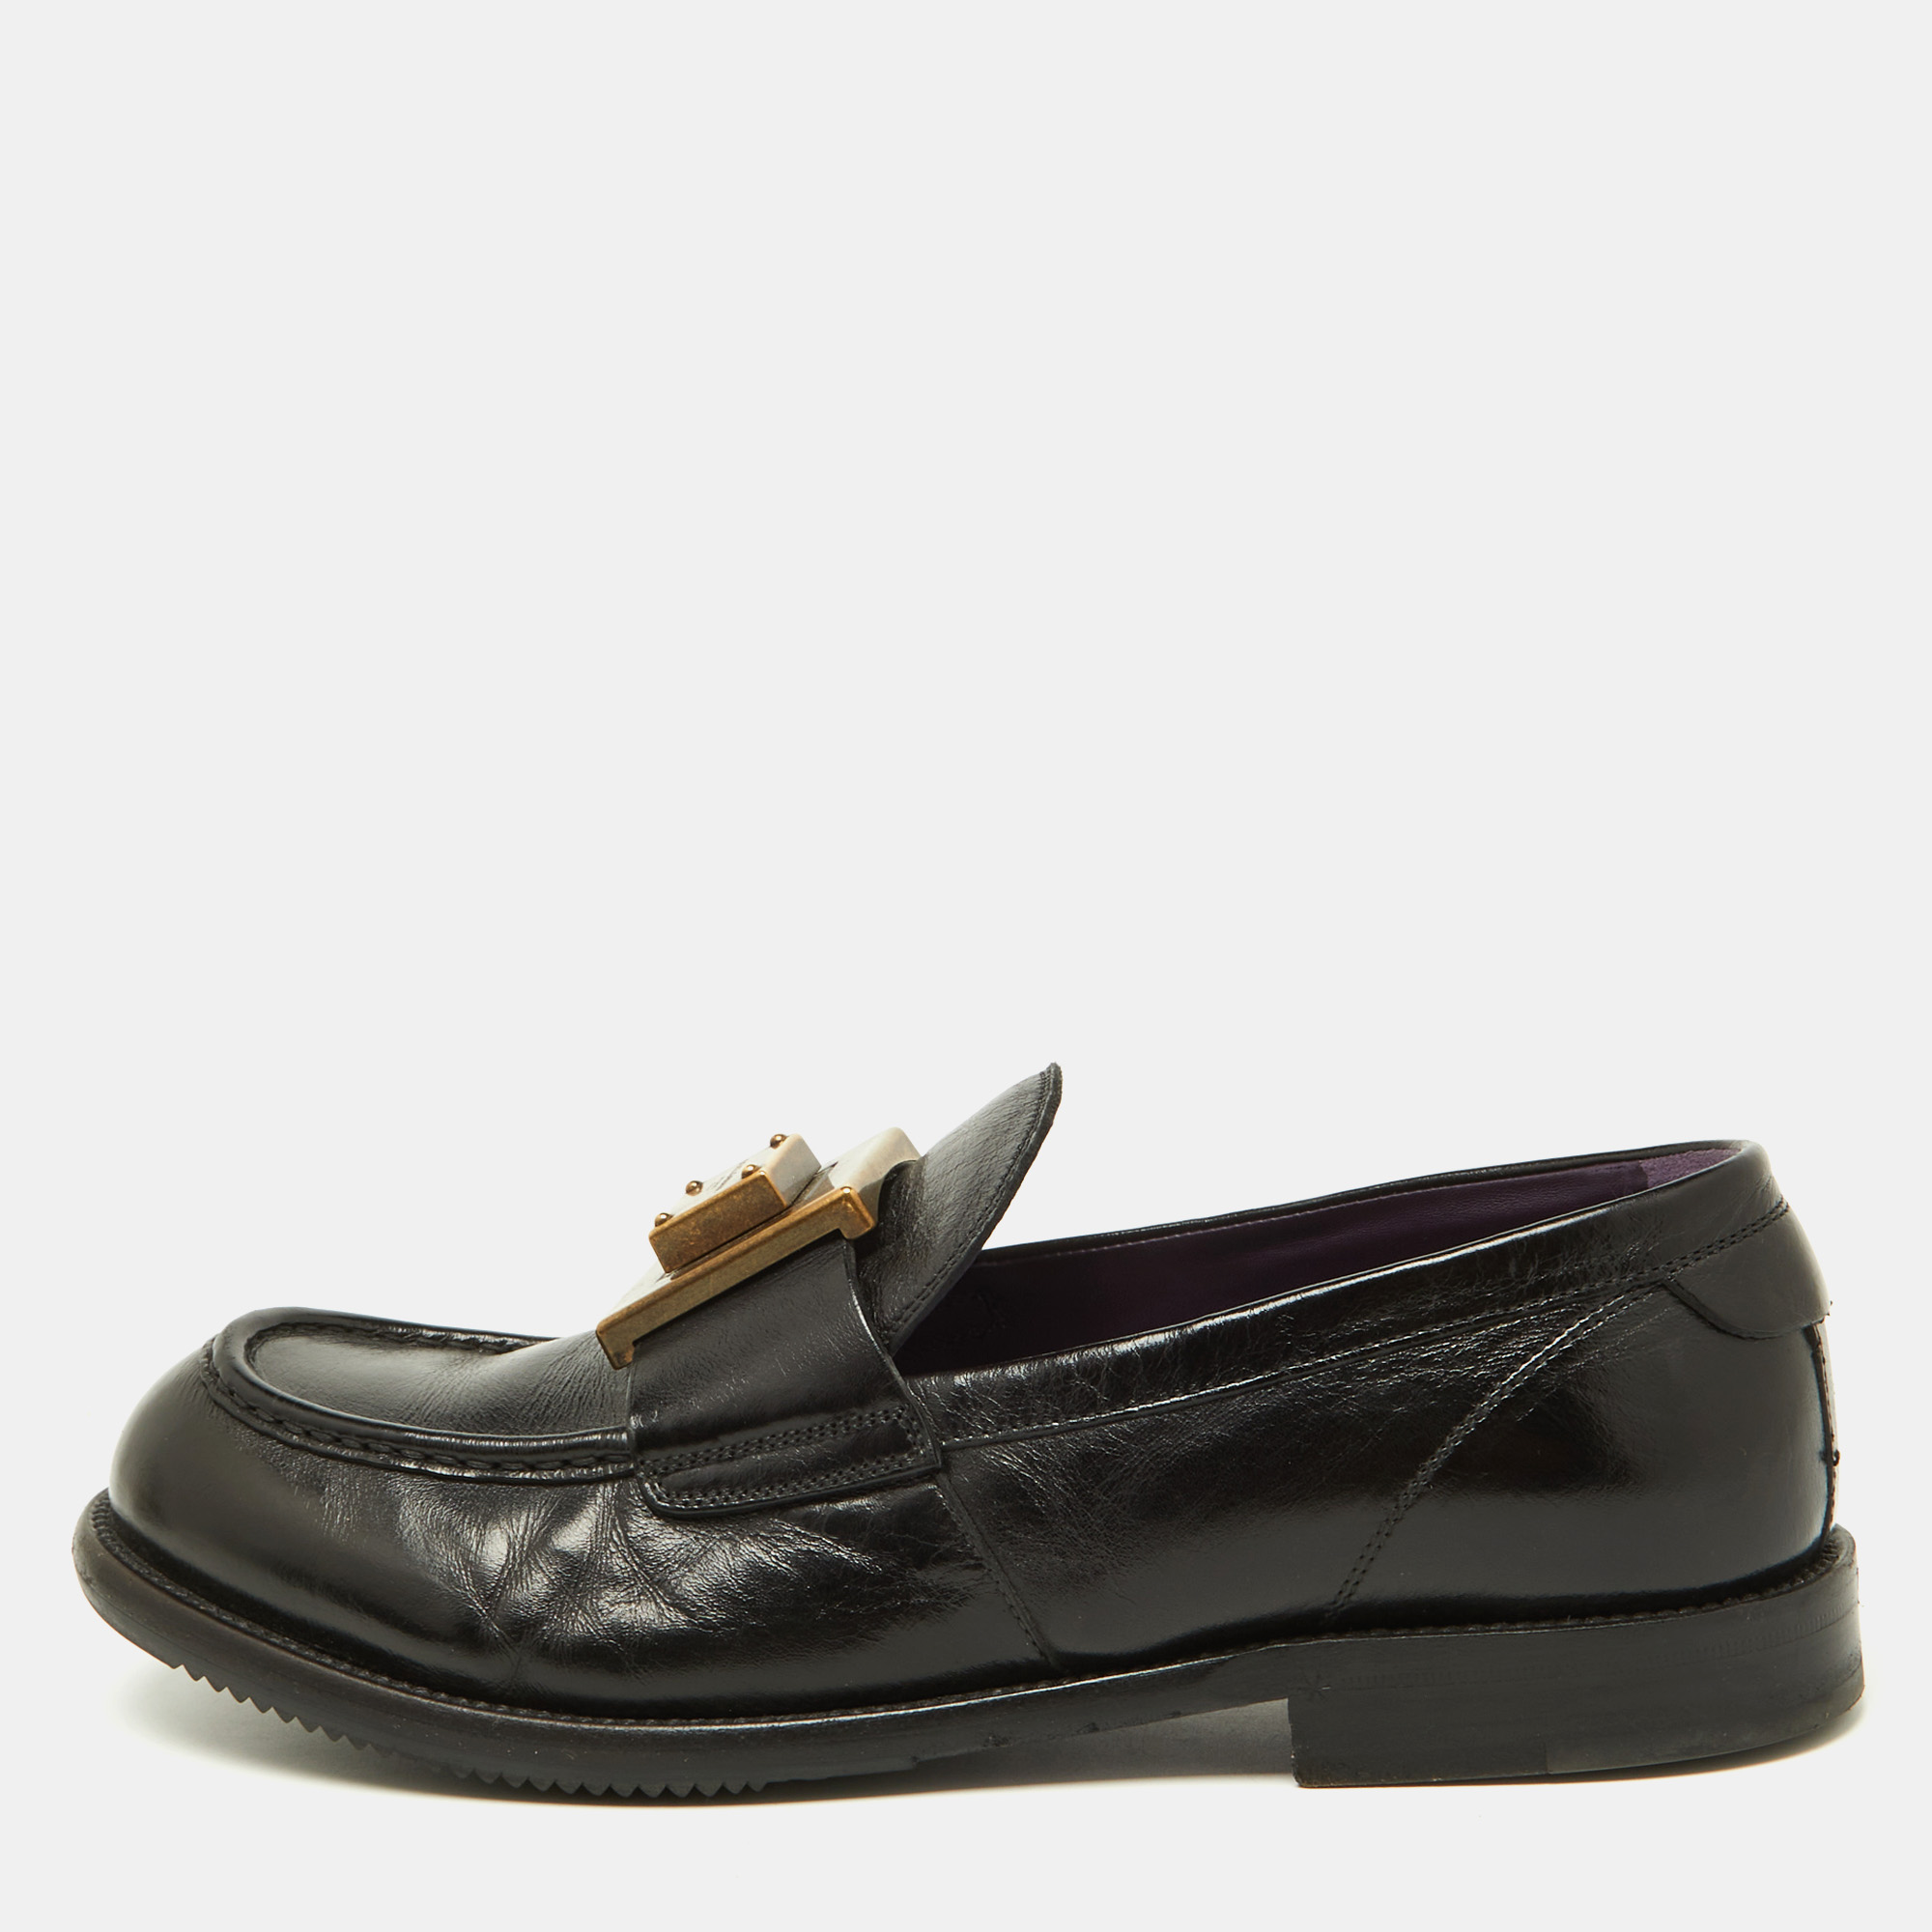 Dolce & gabbana black leather mino slip on loafers size 42